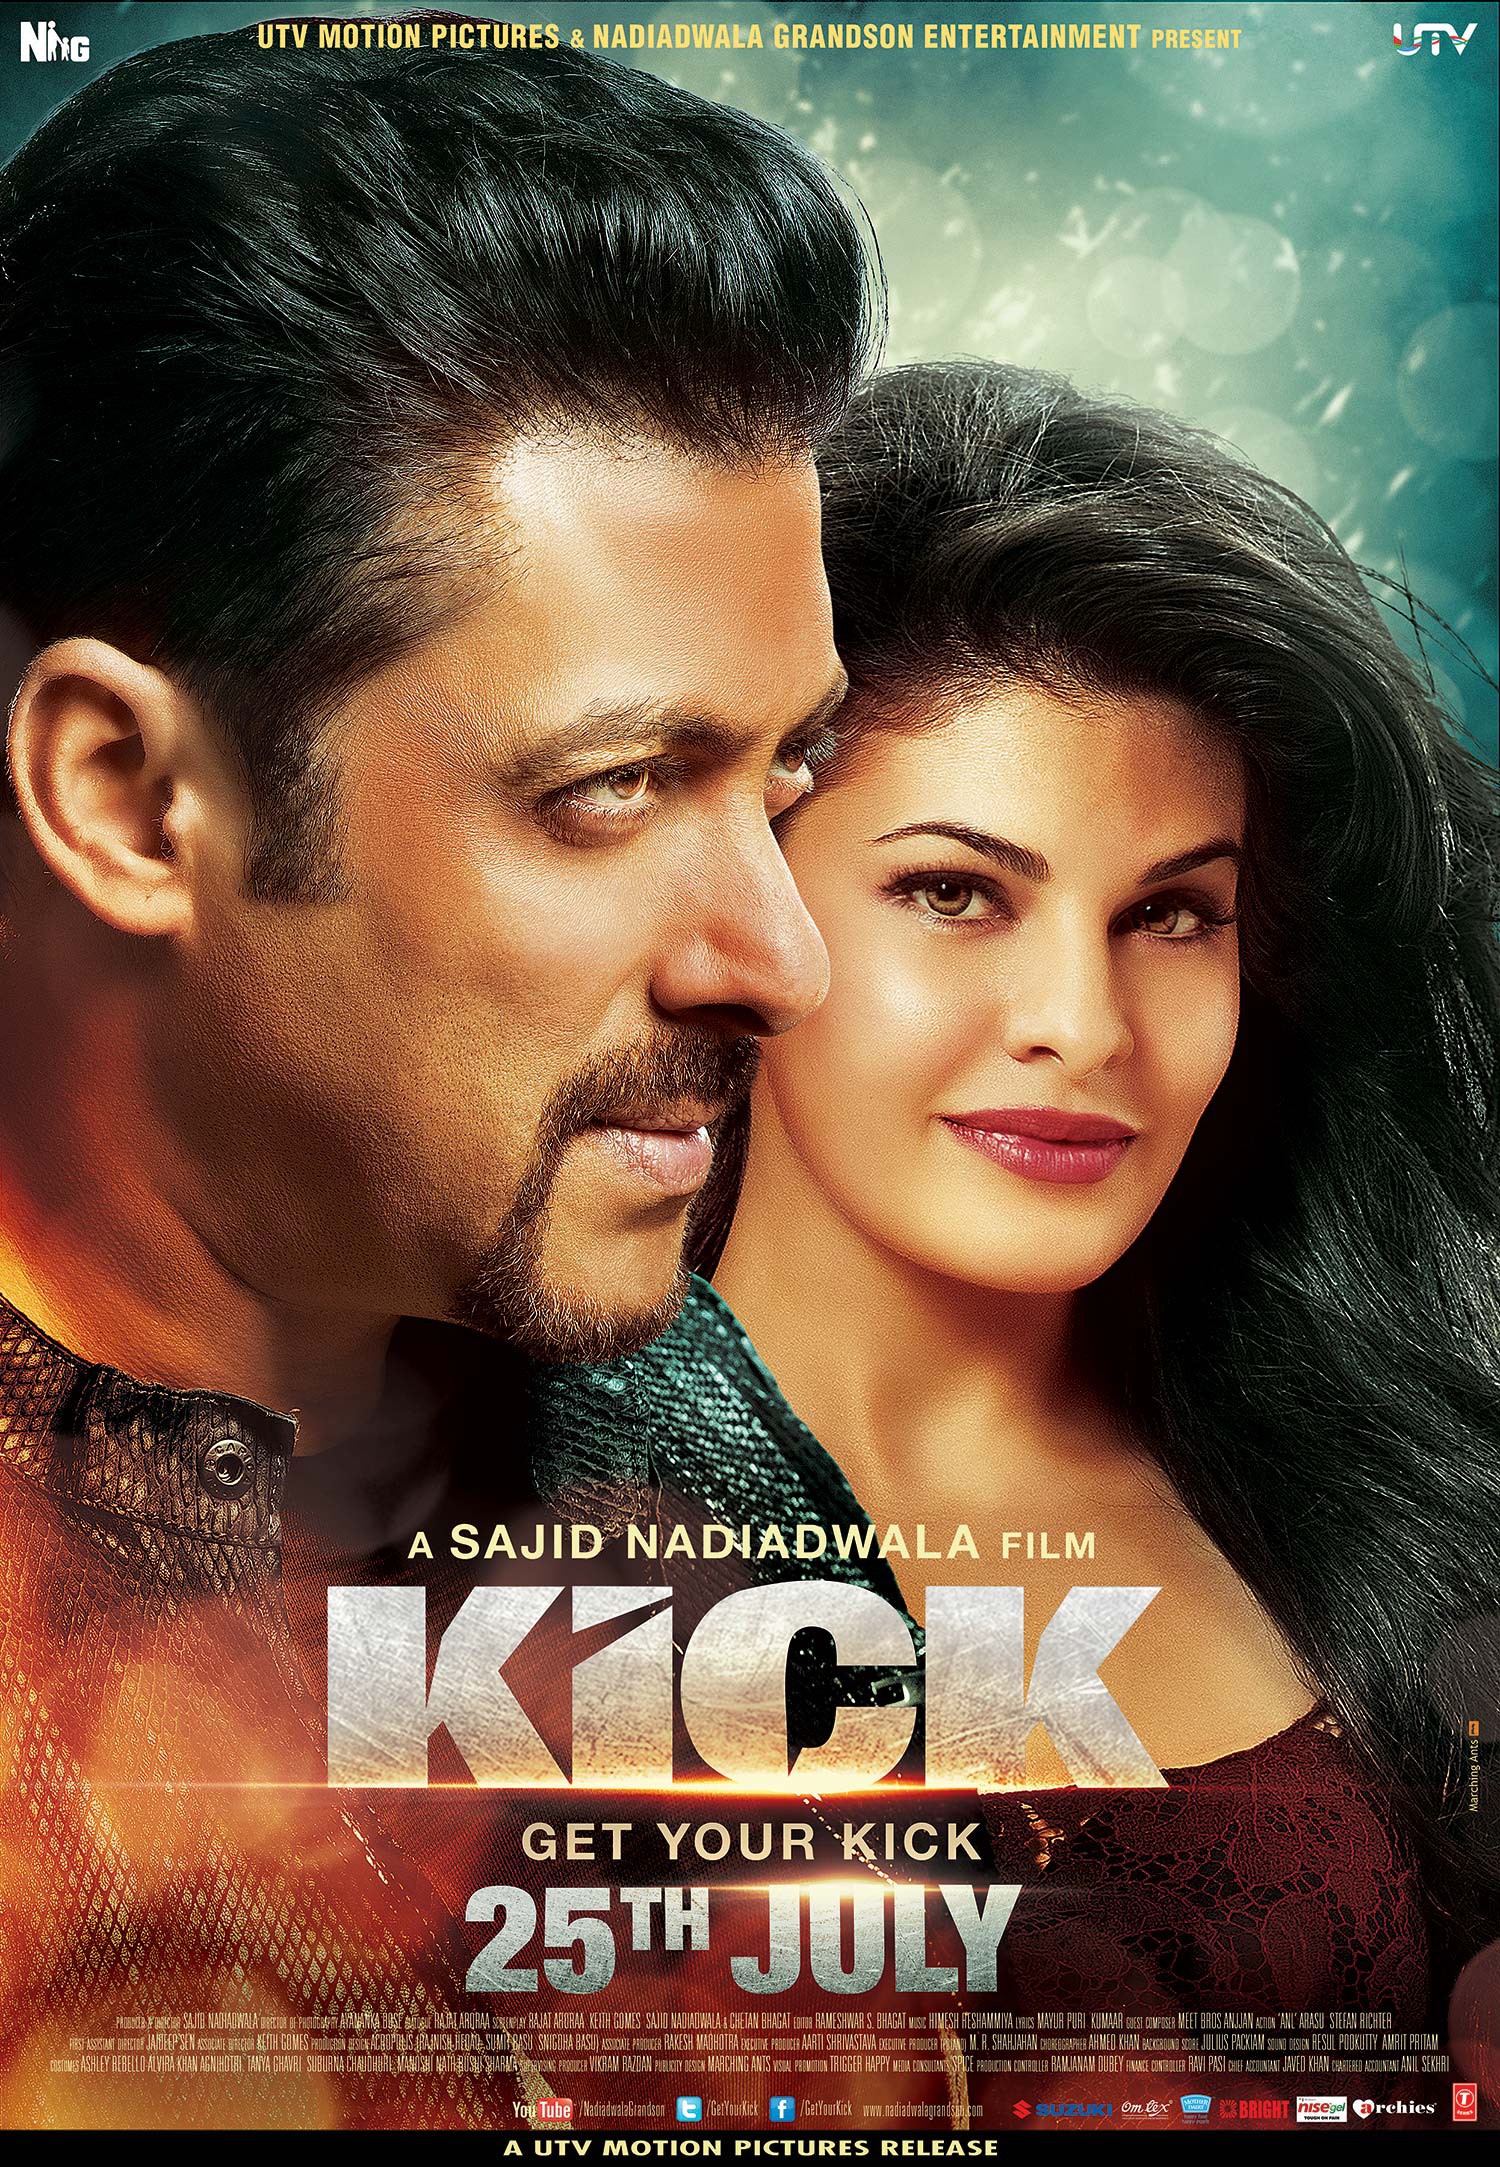 Mega Sized Movie Poster Image for Kick (#6 of 12)